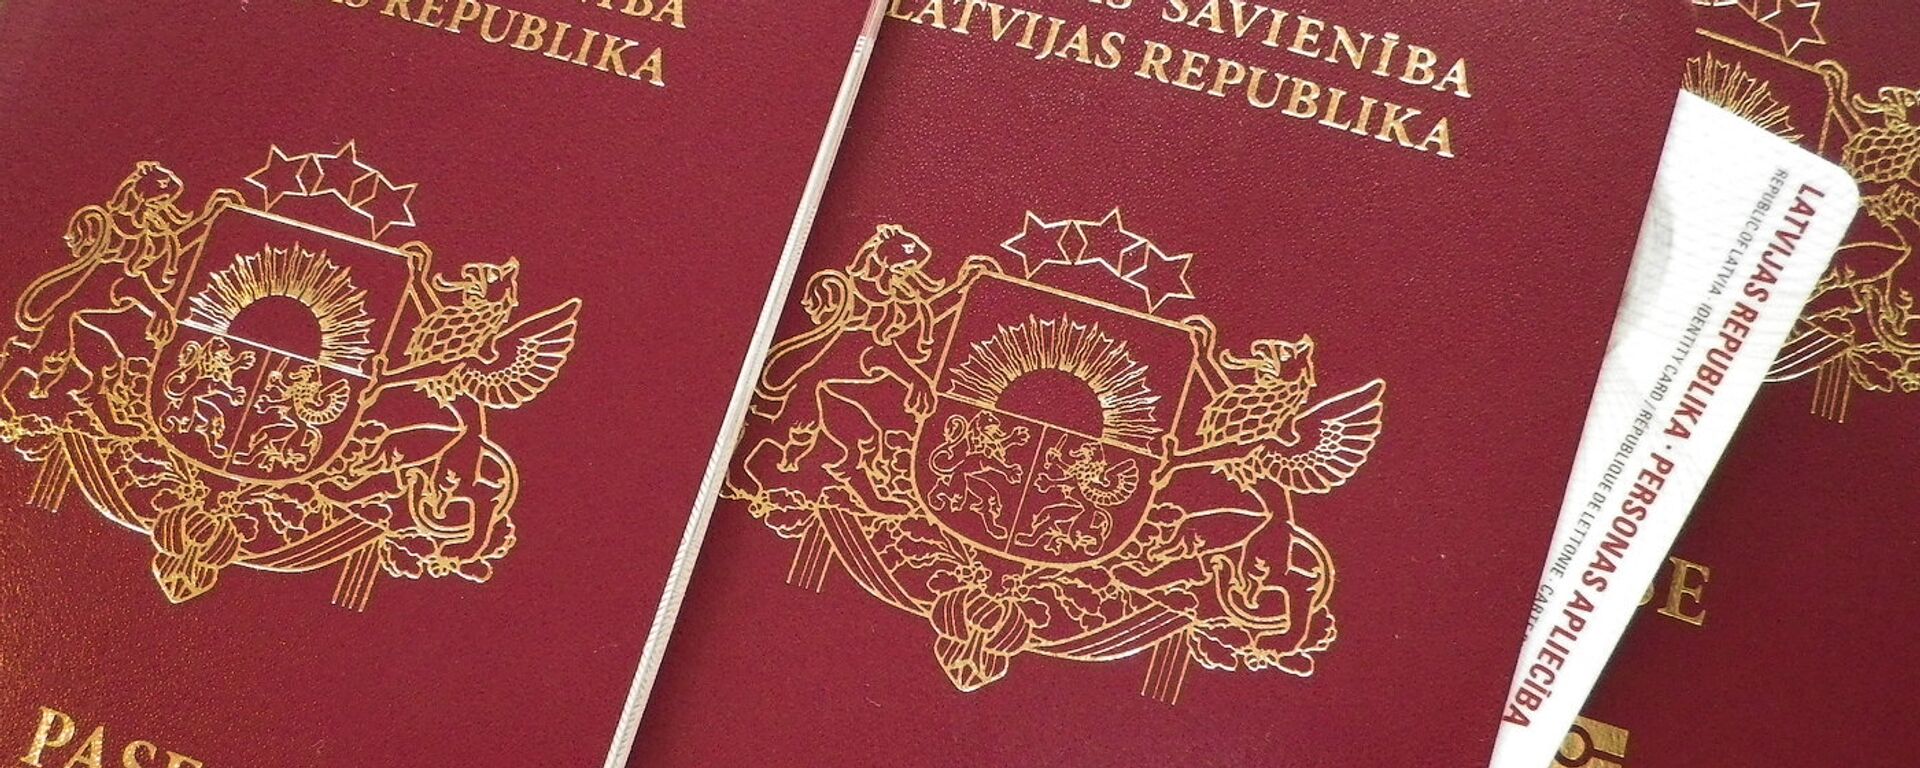 Латвийский паспорт - Sputnik Латвия, 1920, 17.05.2018